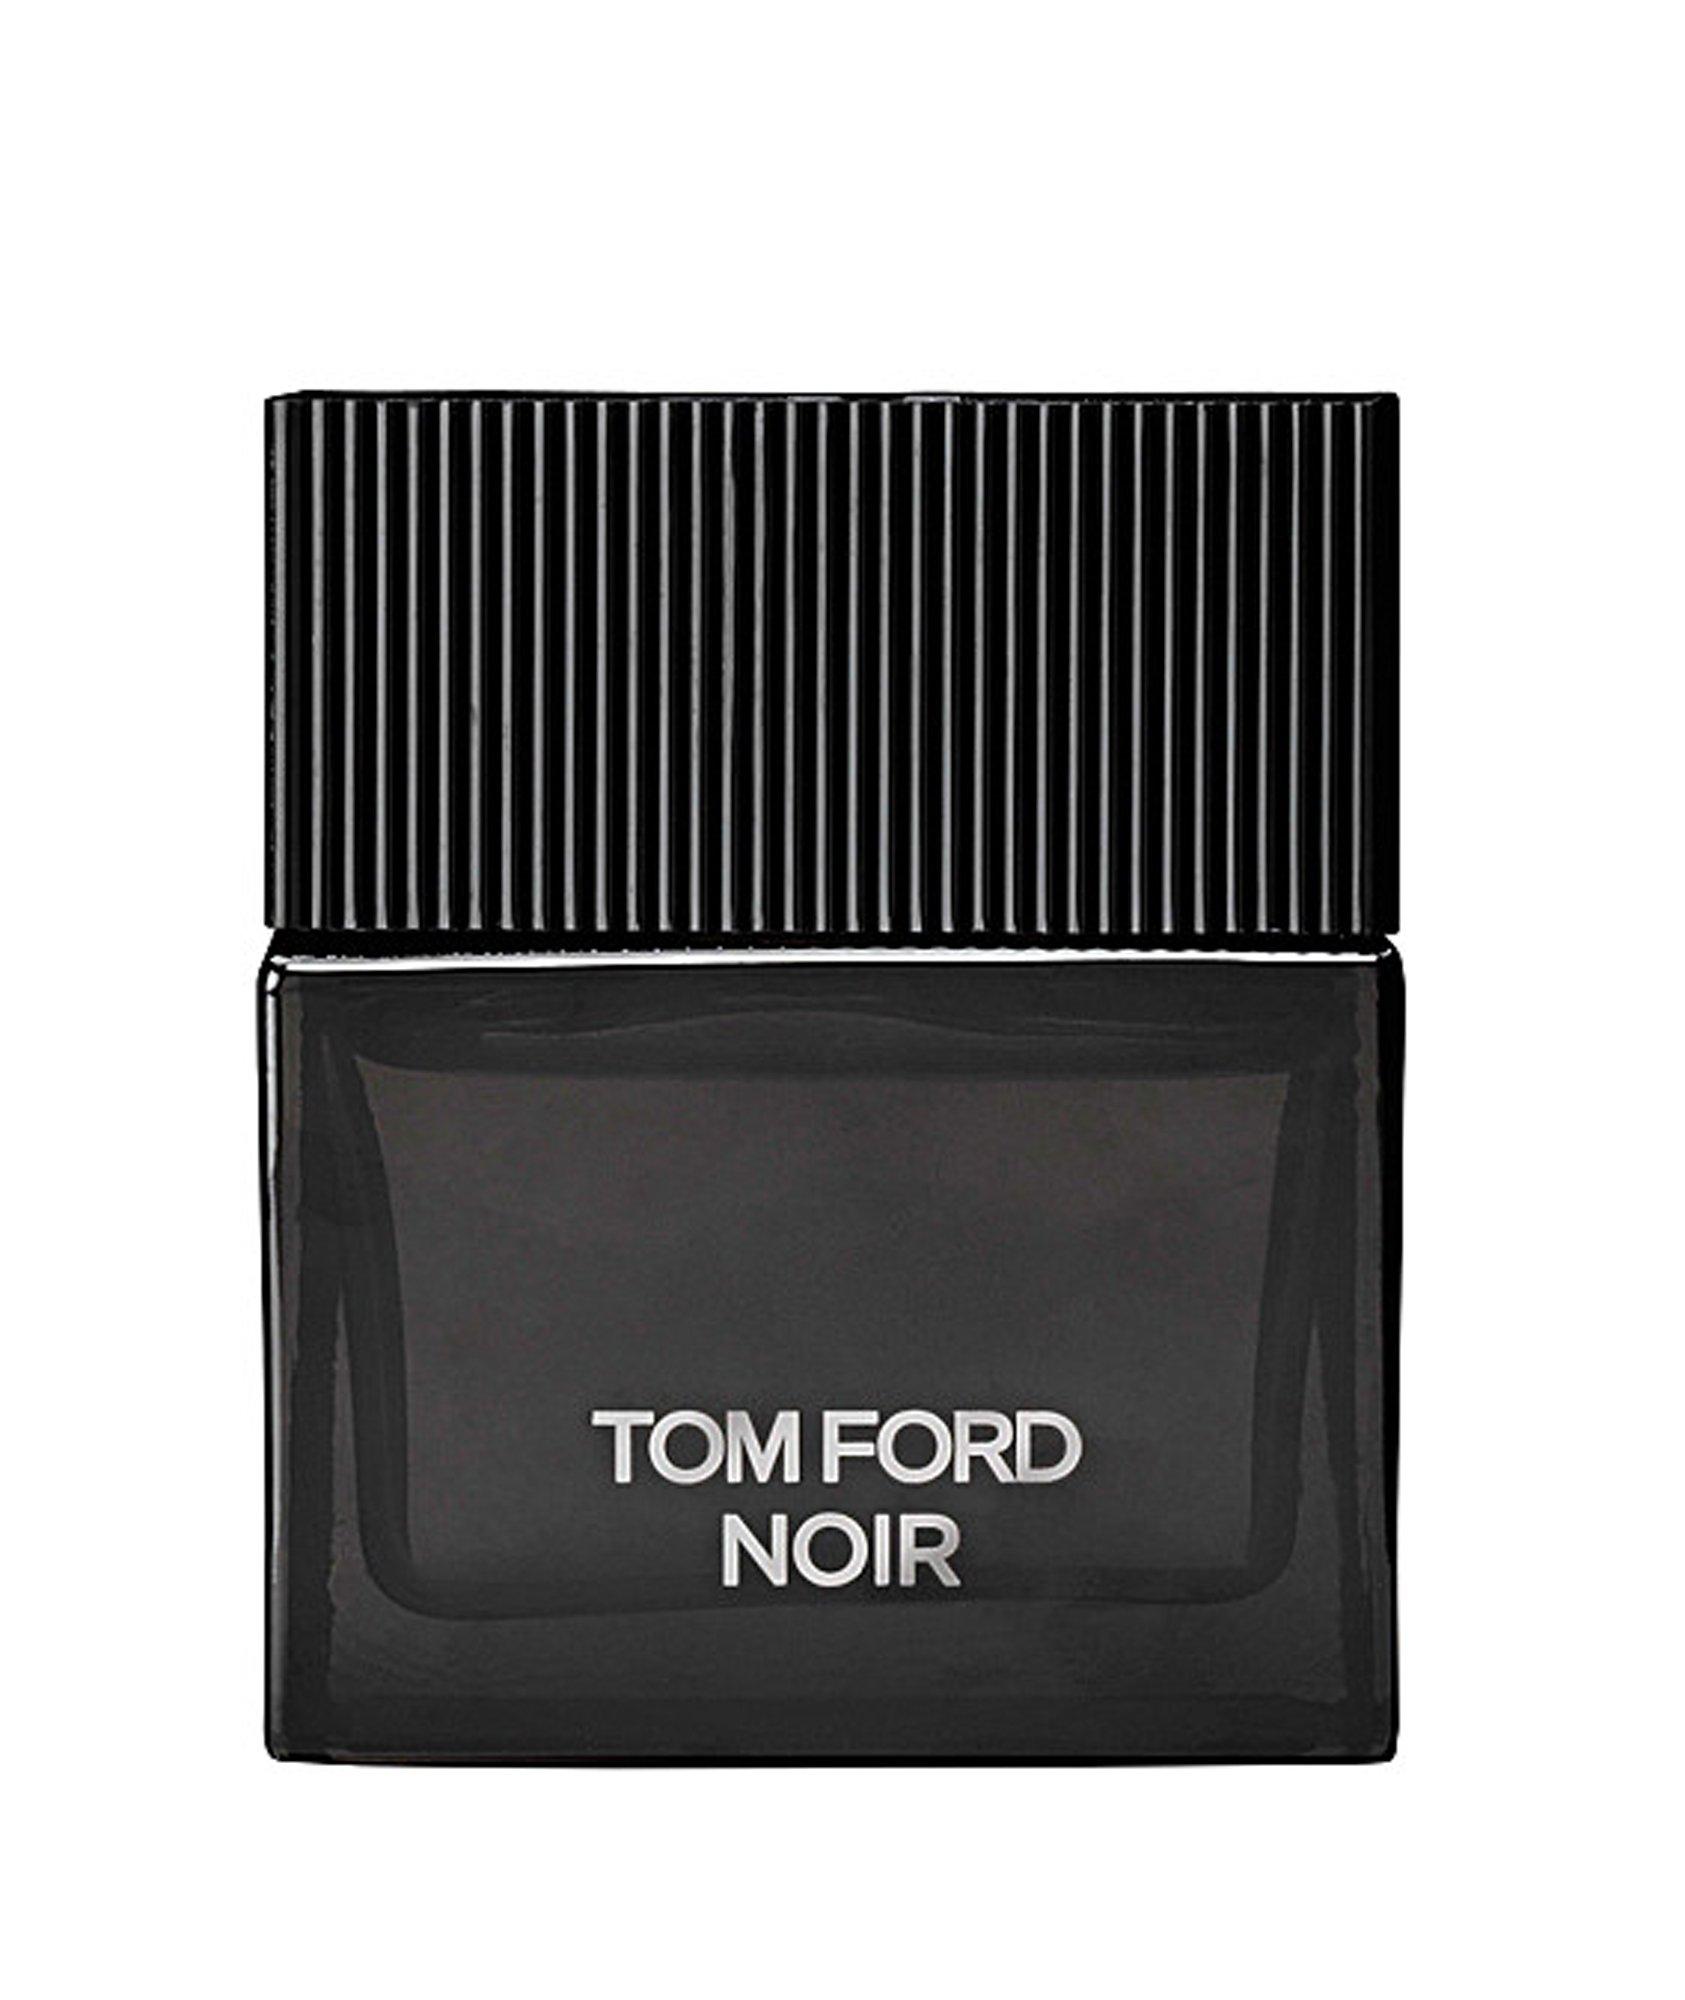 Tom Ford Noir image 0